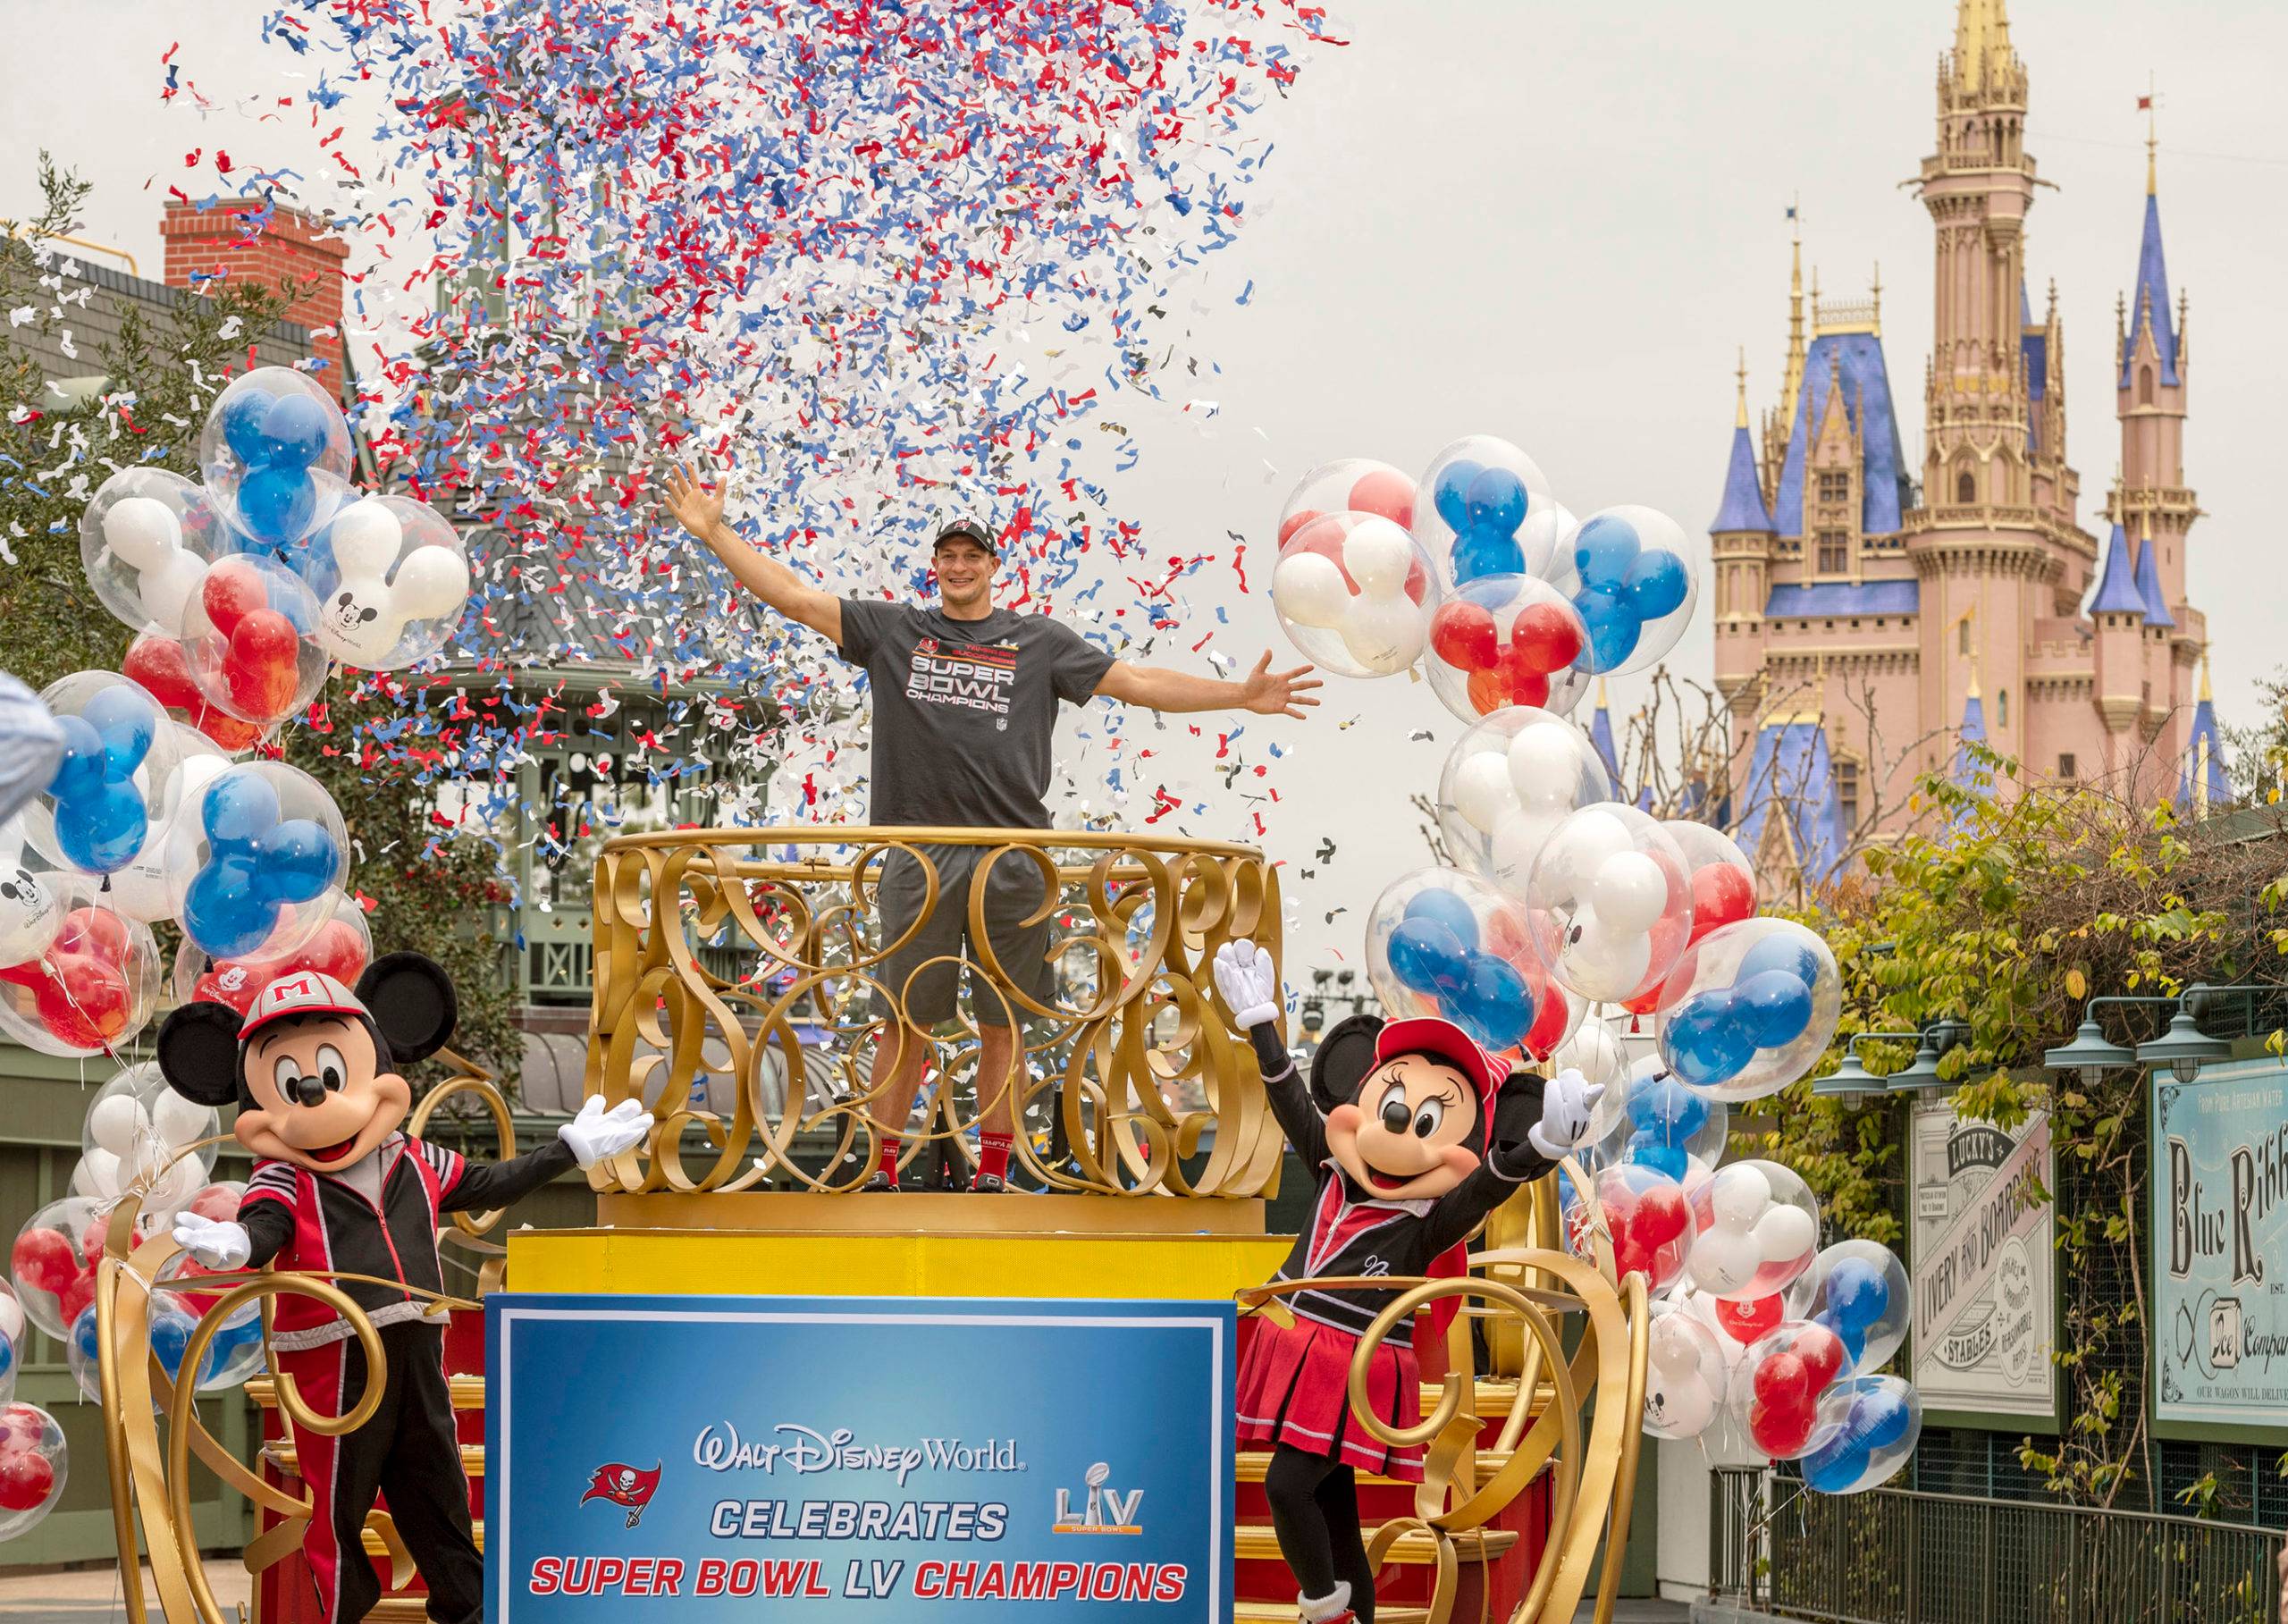 PHOTOS - Rob Gronkowski Celebrates Super Bowl LV victory at Walt Disney World